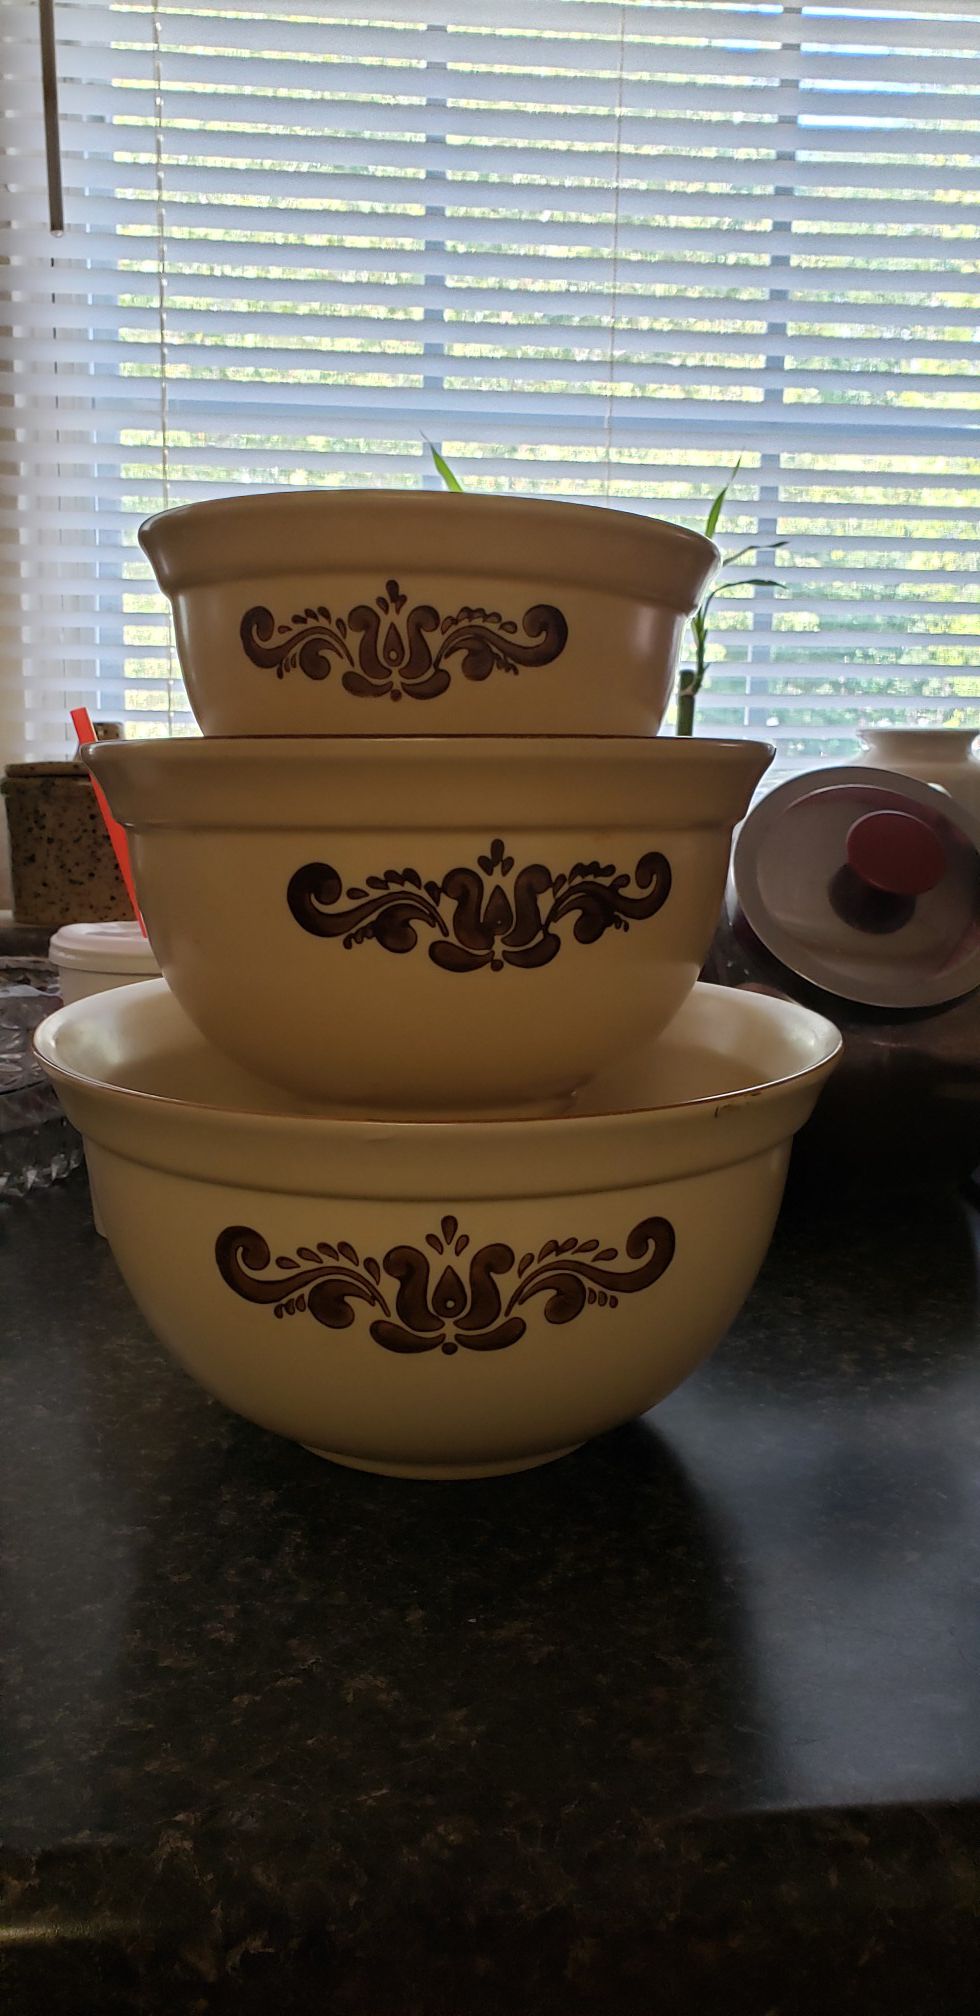 Pfaltzgraff mixing bowls and platter